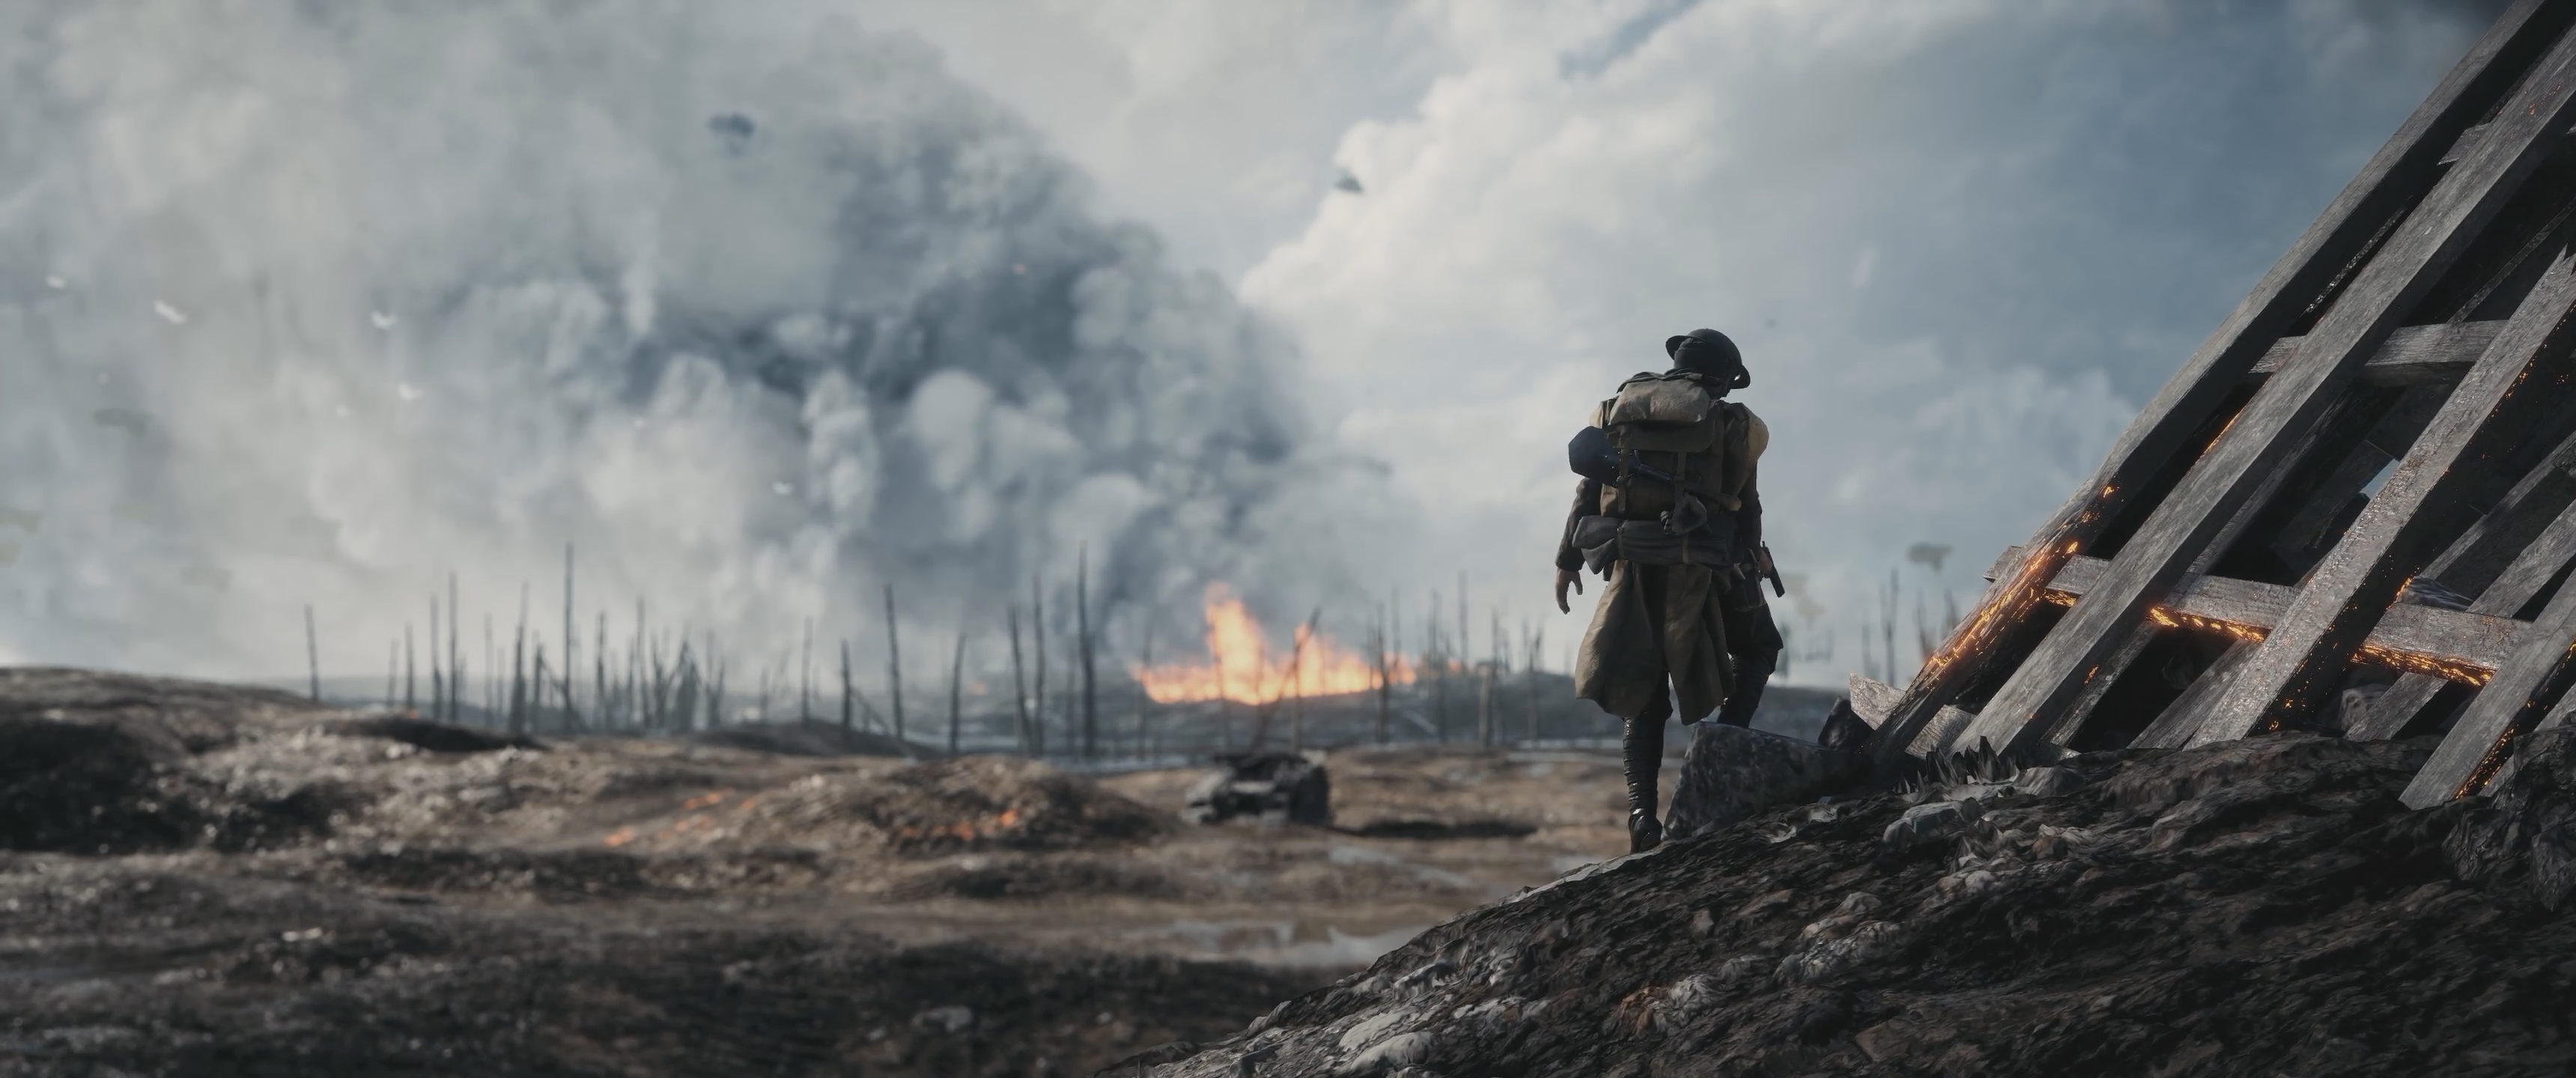 Battlefield 1 3440x1440 resolutie ingame screenshot